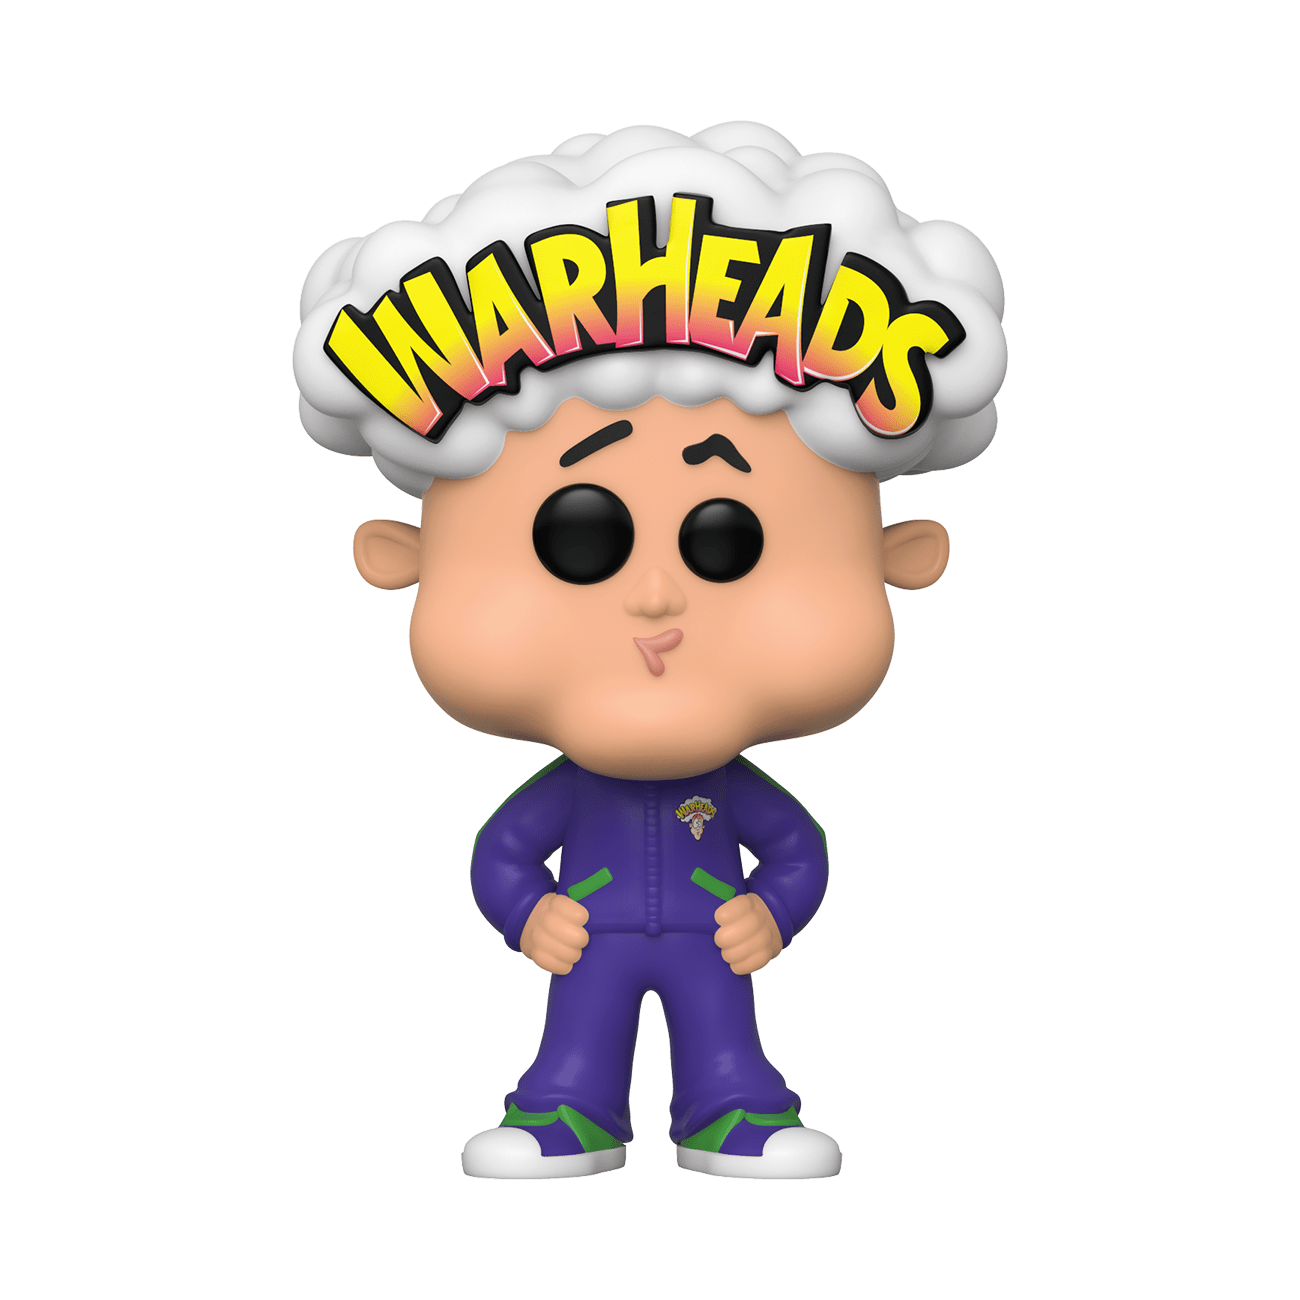 Funko Pop! Wally Warheads (Ad Icons)